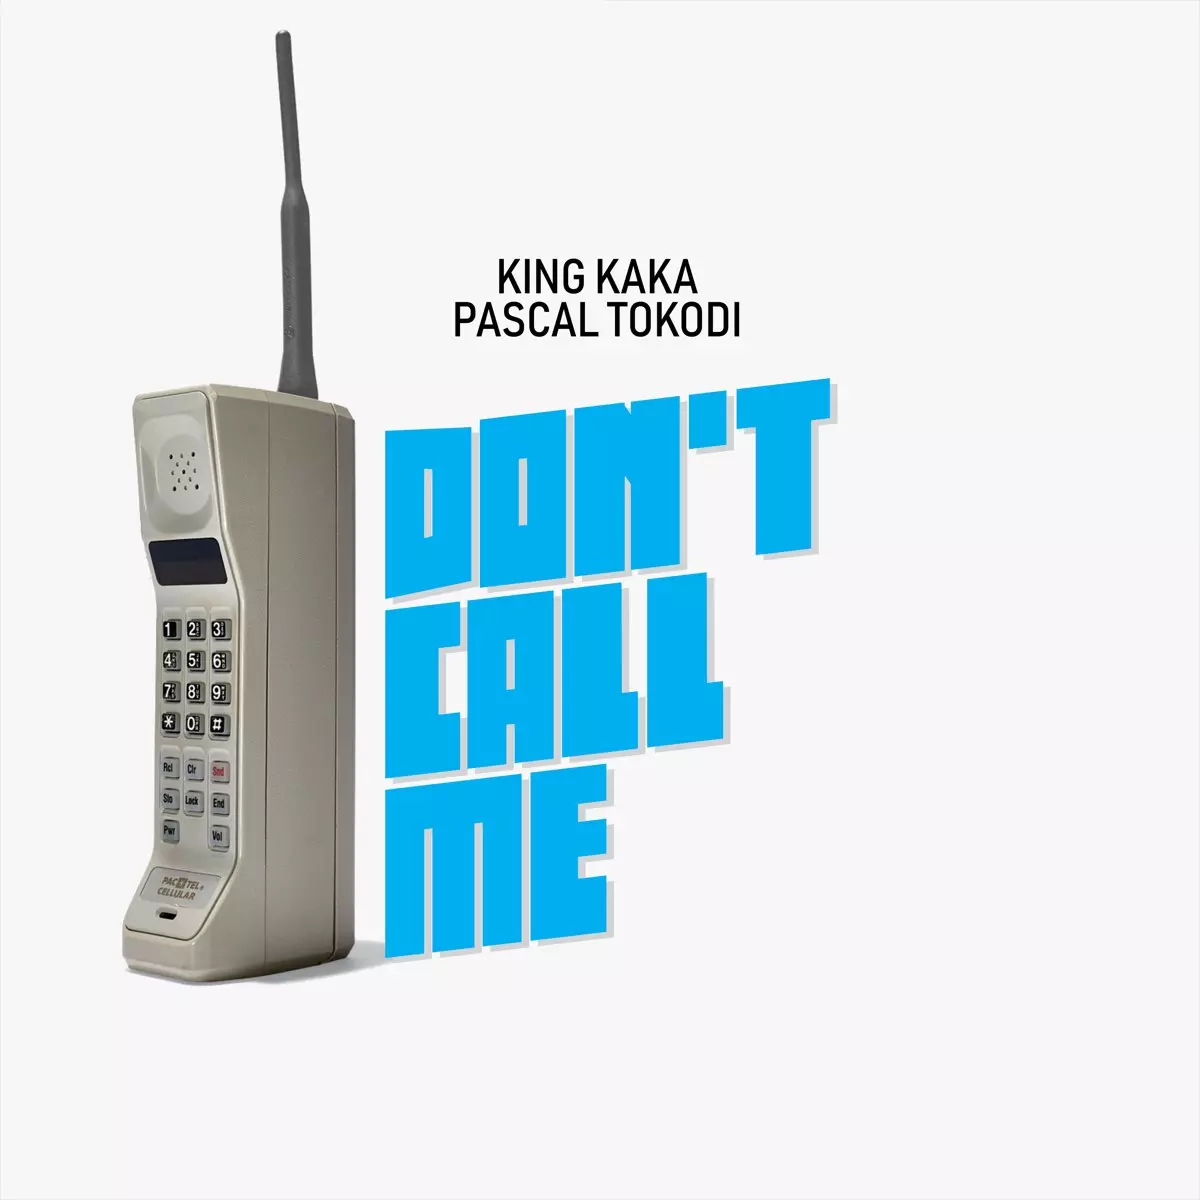 Don't Call Me (feat. Pascal Tokodi) - Single by King Kaka on Apple Music